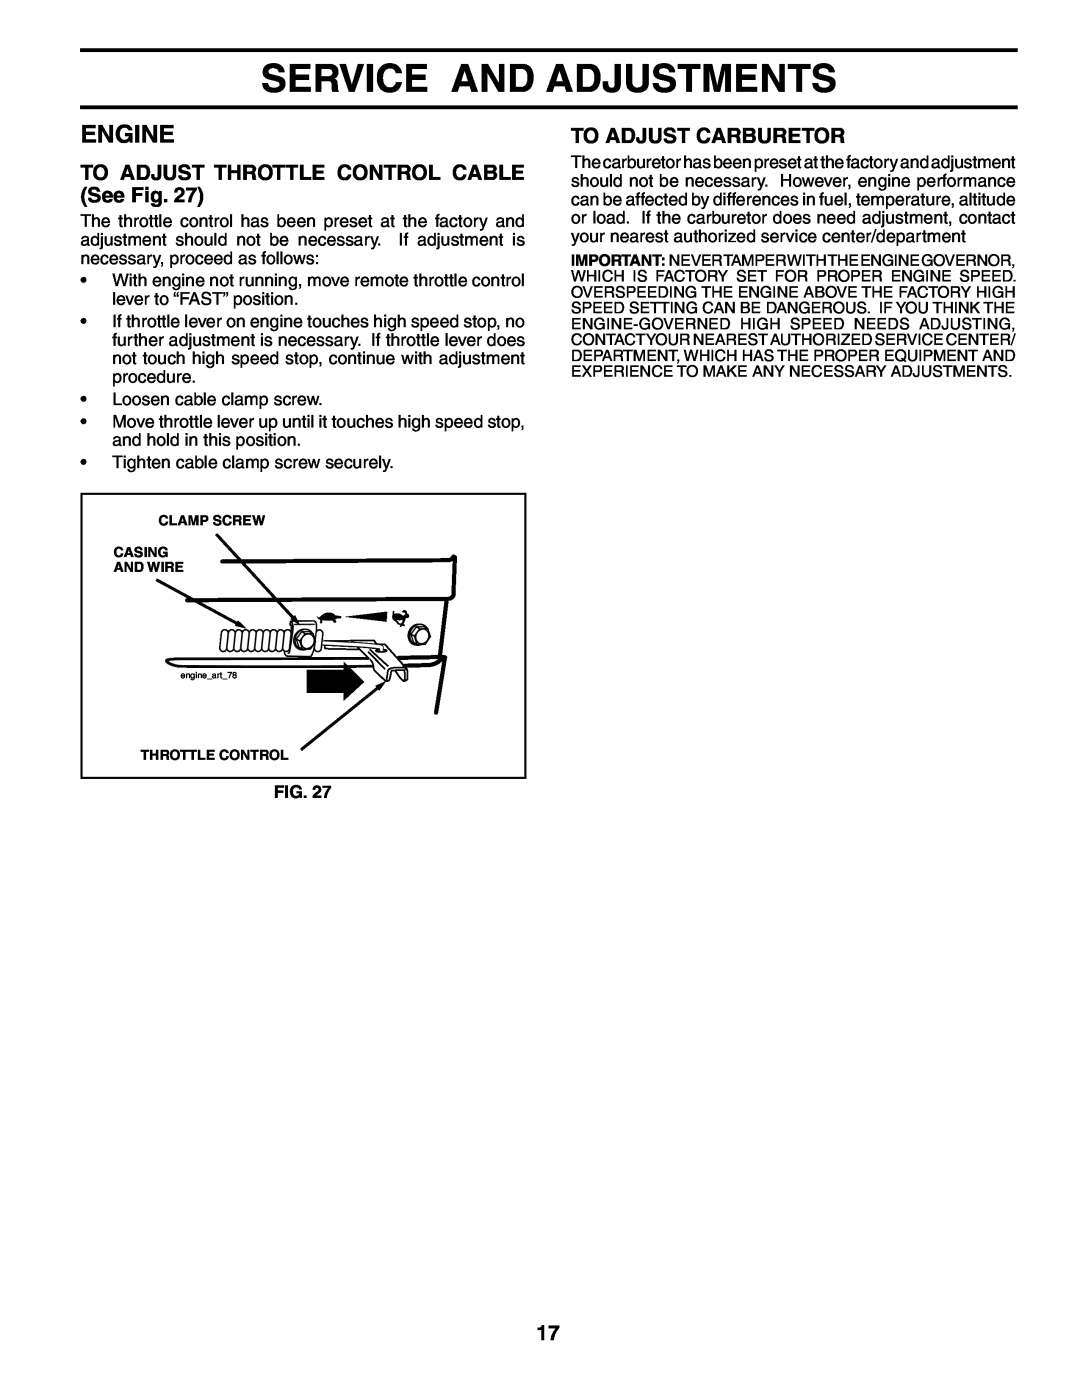 Poulan PRRT65 manual TO ADJUST THROTTLE CONTROL CABLE See Fig, To Adjust Carburetor, Service And Adjustments, Engine 